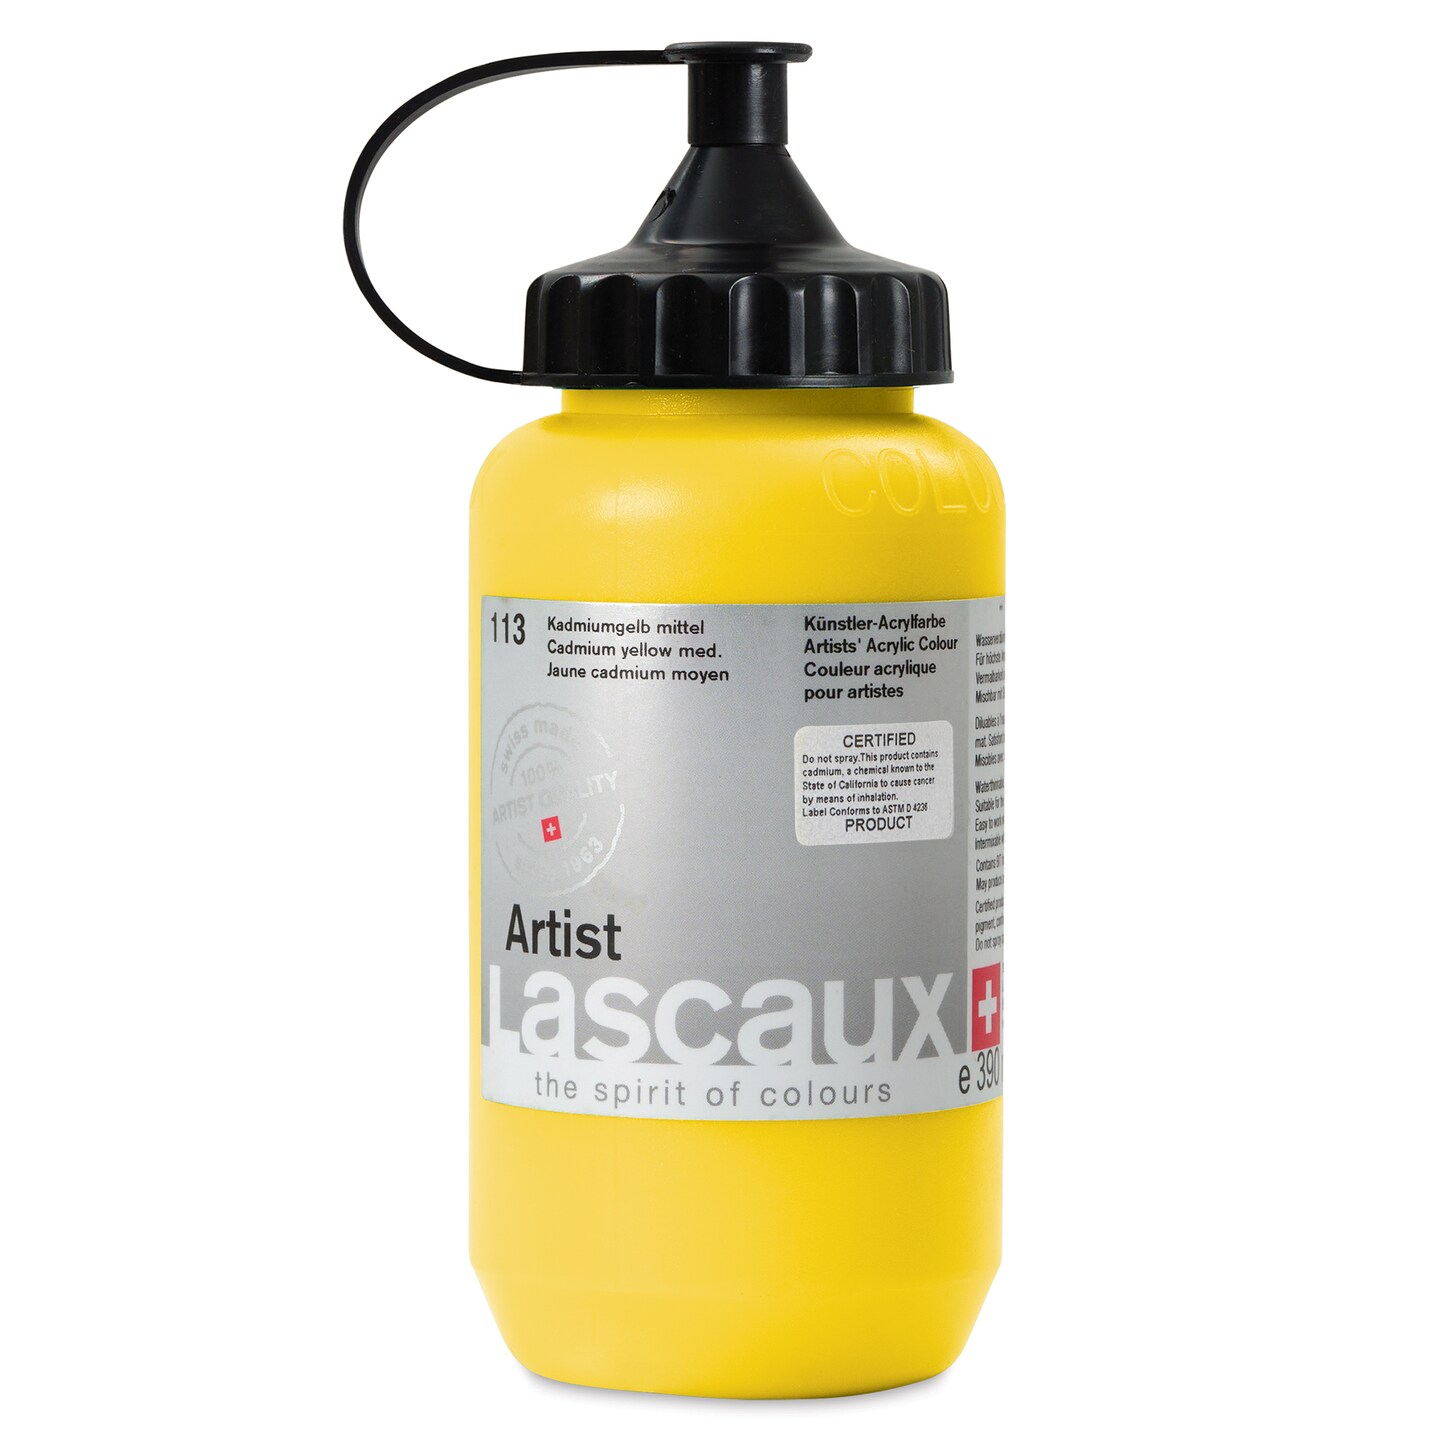 Lascaux Artist Acrylics - Cadmium Yellow Medium, 390 ml Tube